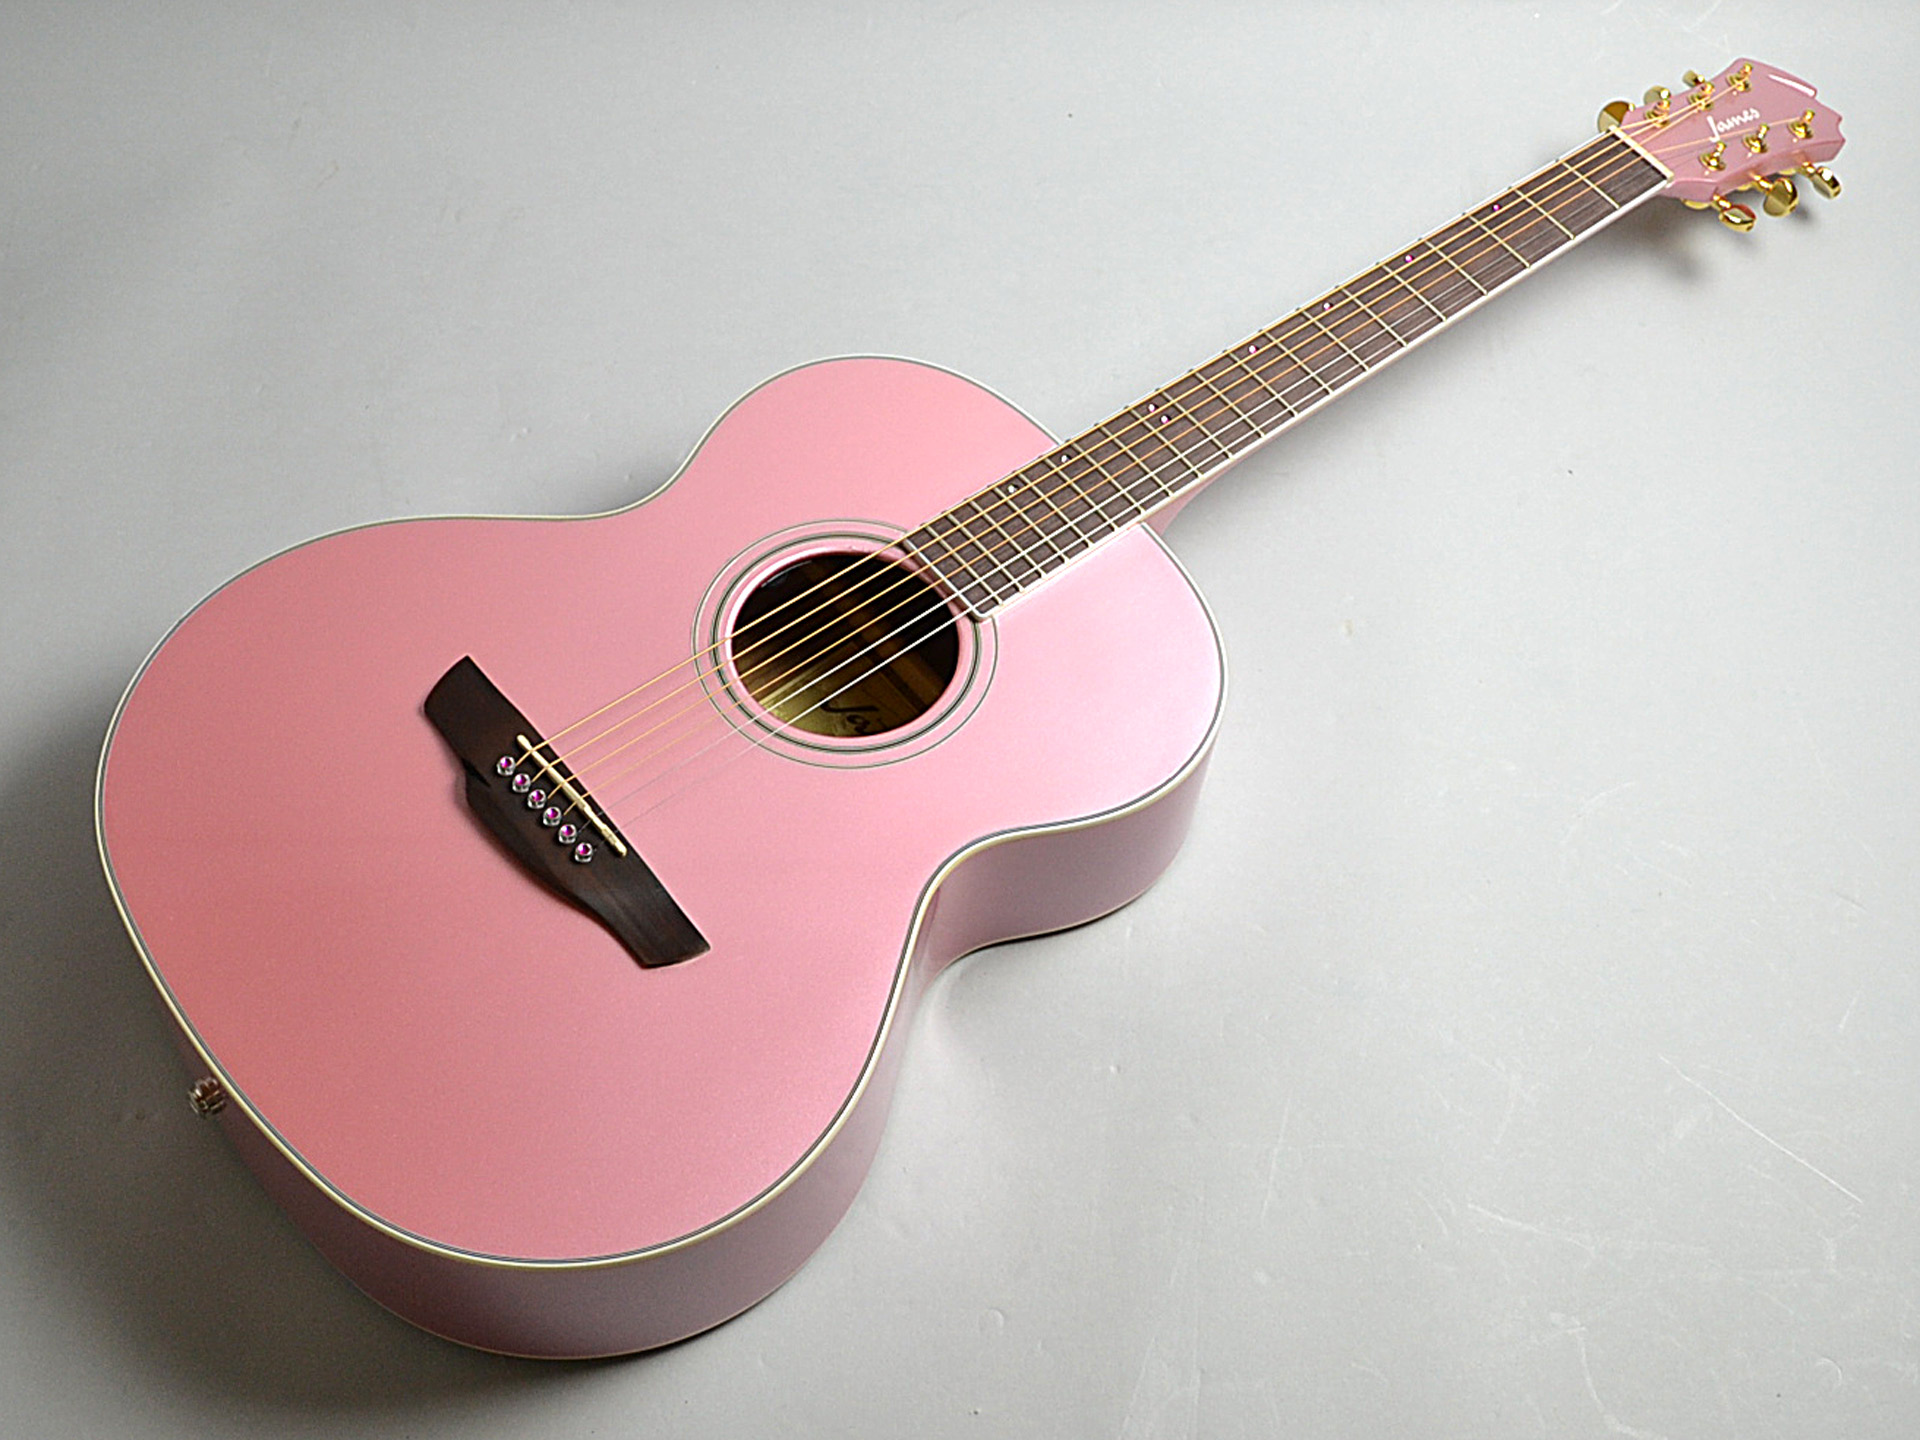 [https://twitter.com/shima_kuzuha::title=] 島村楽器オリジナルブランド「James」より、今回新たにJ-500Aのスペシャルカラーが入荷しました！ *J-500A/SPC 新たに入荷したのは「J-500A-SPC」です！こちらのギター、基本スペックは「J-5 […]